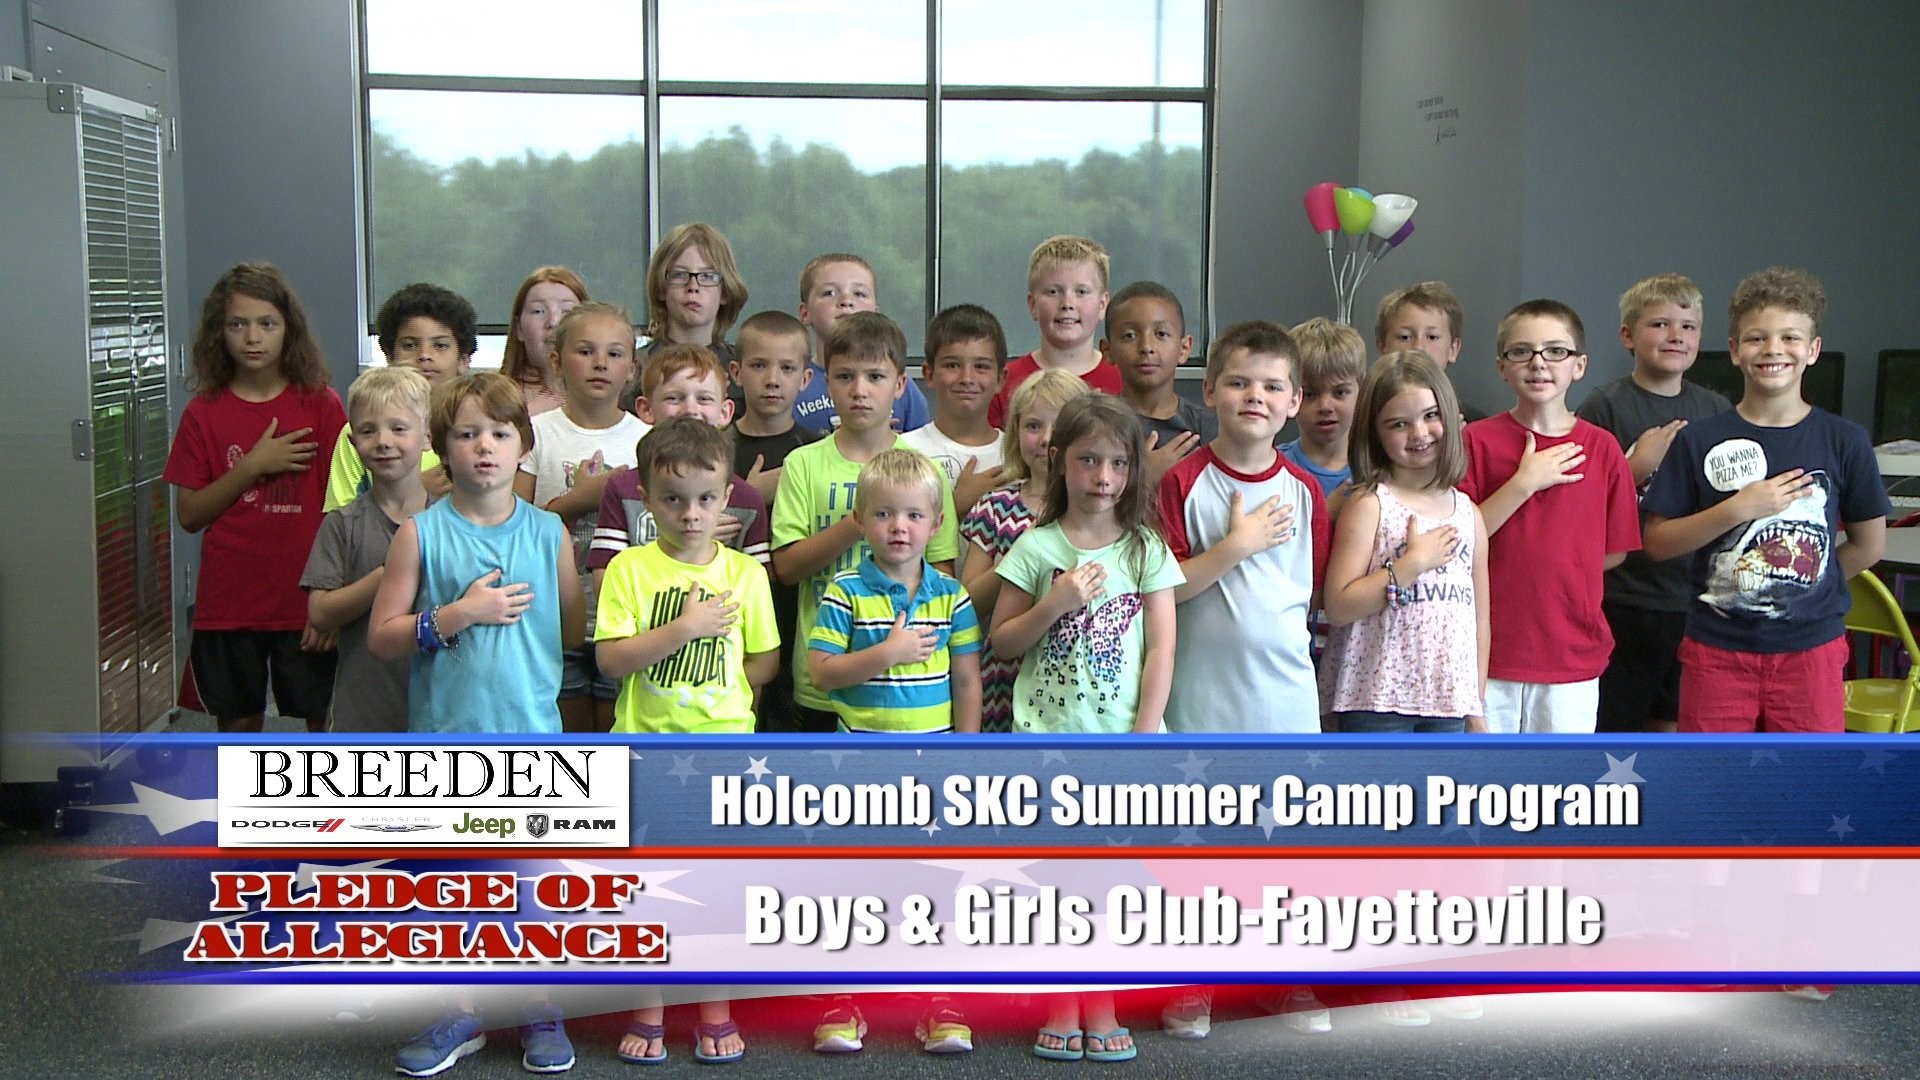 Boys & Girls Club, Fayetteville - Holcomb SKC Summer Camp Program